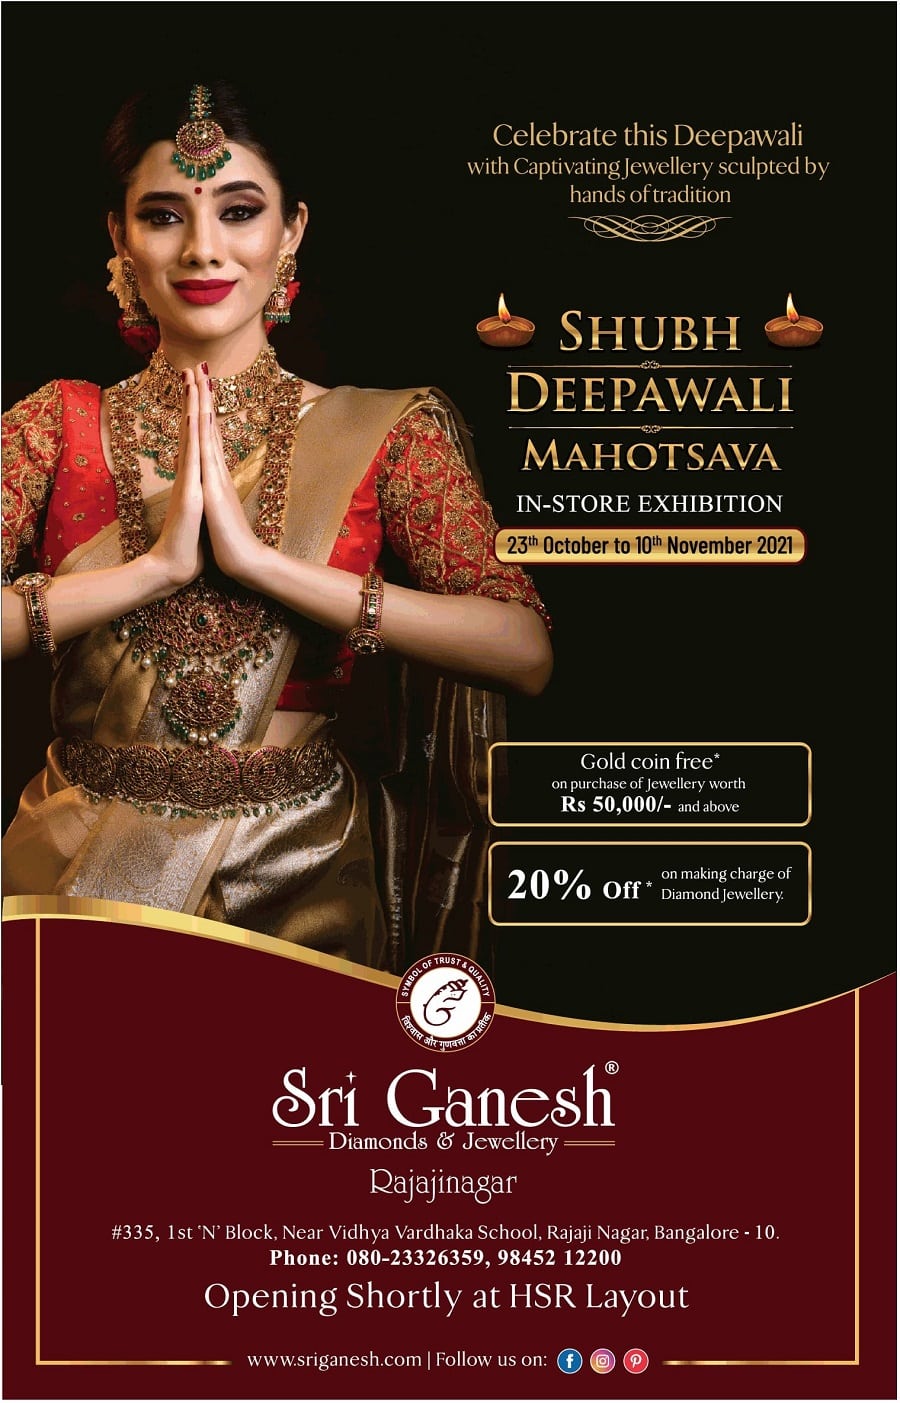 Sri Ganesh Diamonds & Jewellery Diwali offer